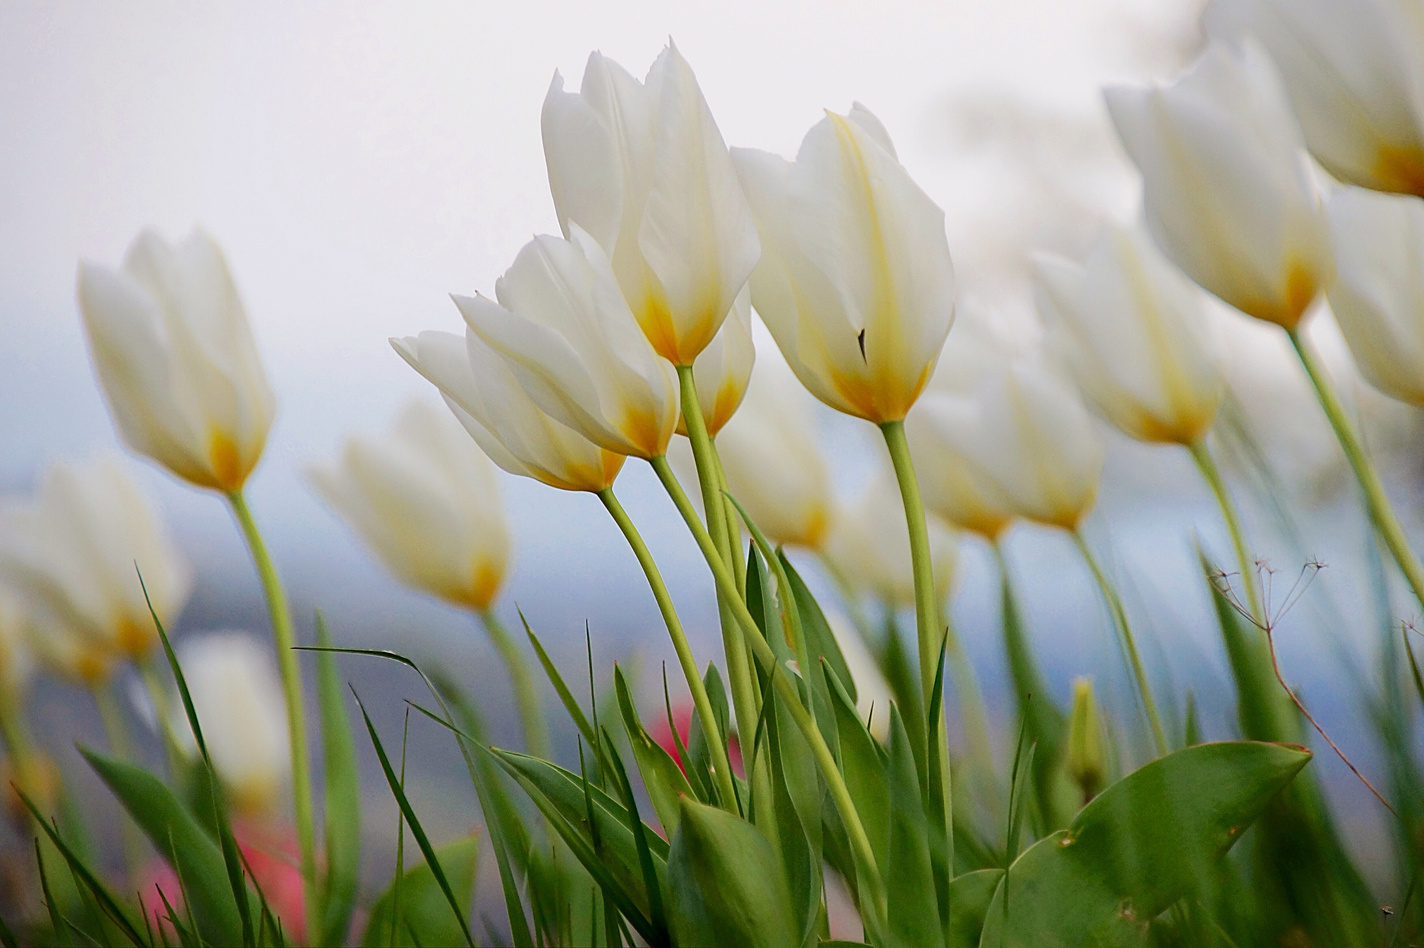 White Tulip Flowers